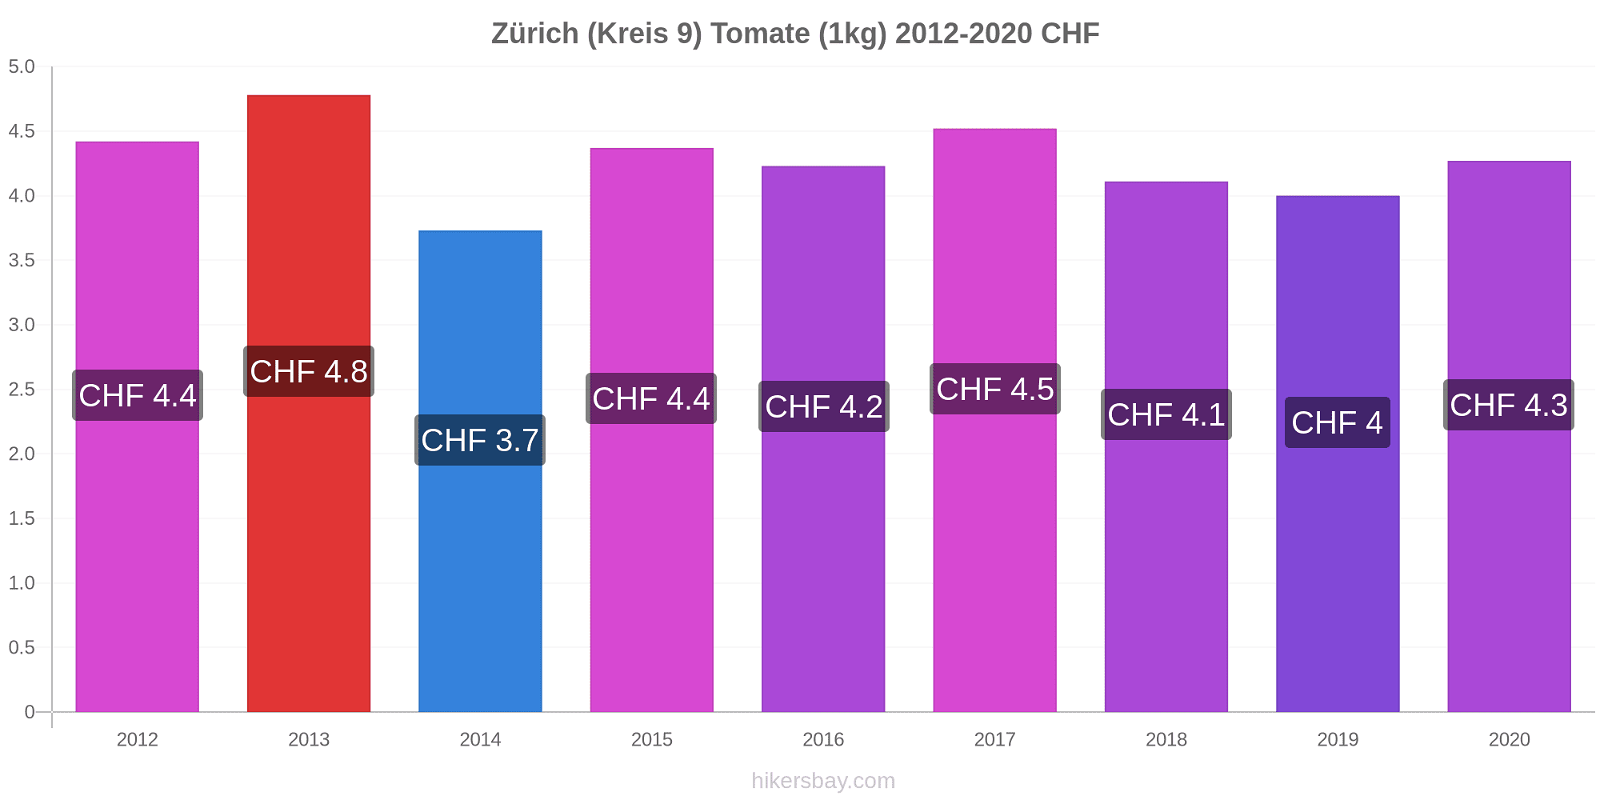 Zürich (Kreis 9) modificări de preț Tomate (1kg) hikersbay.com